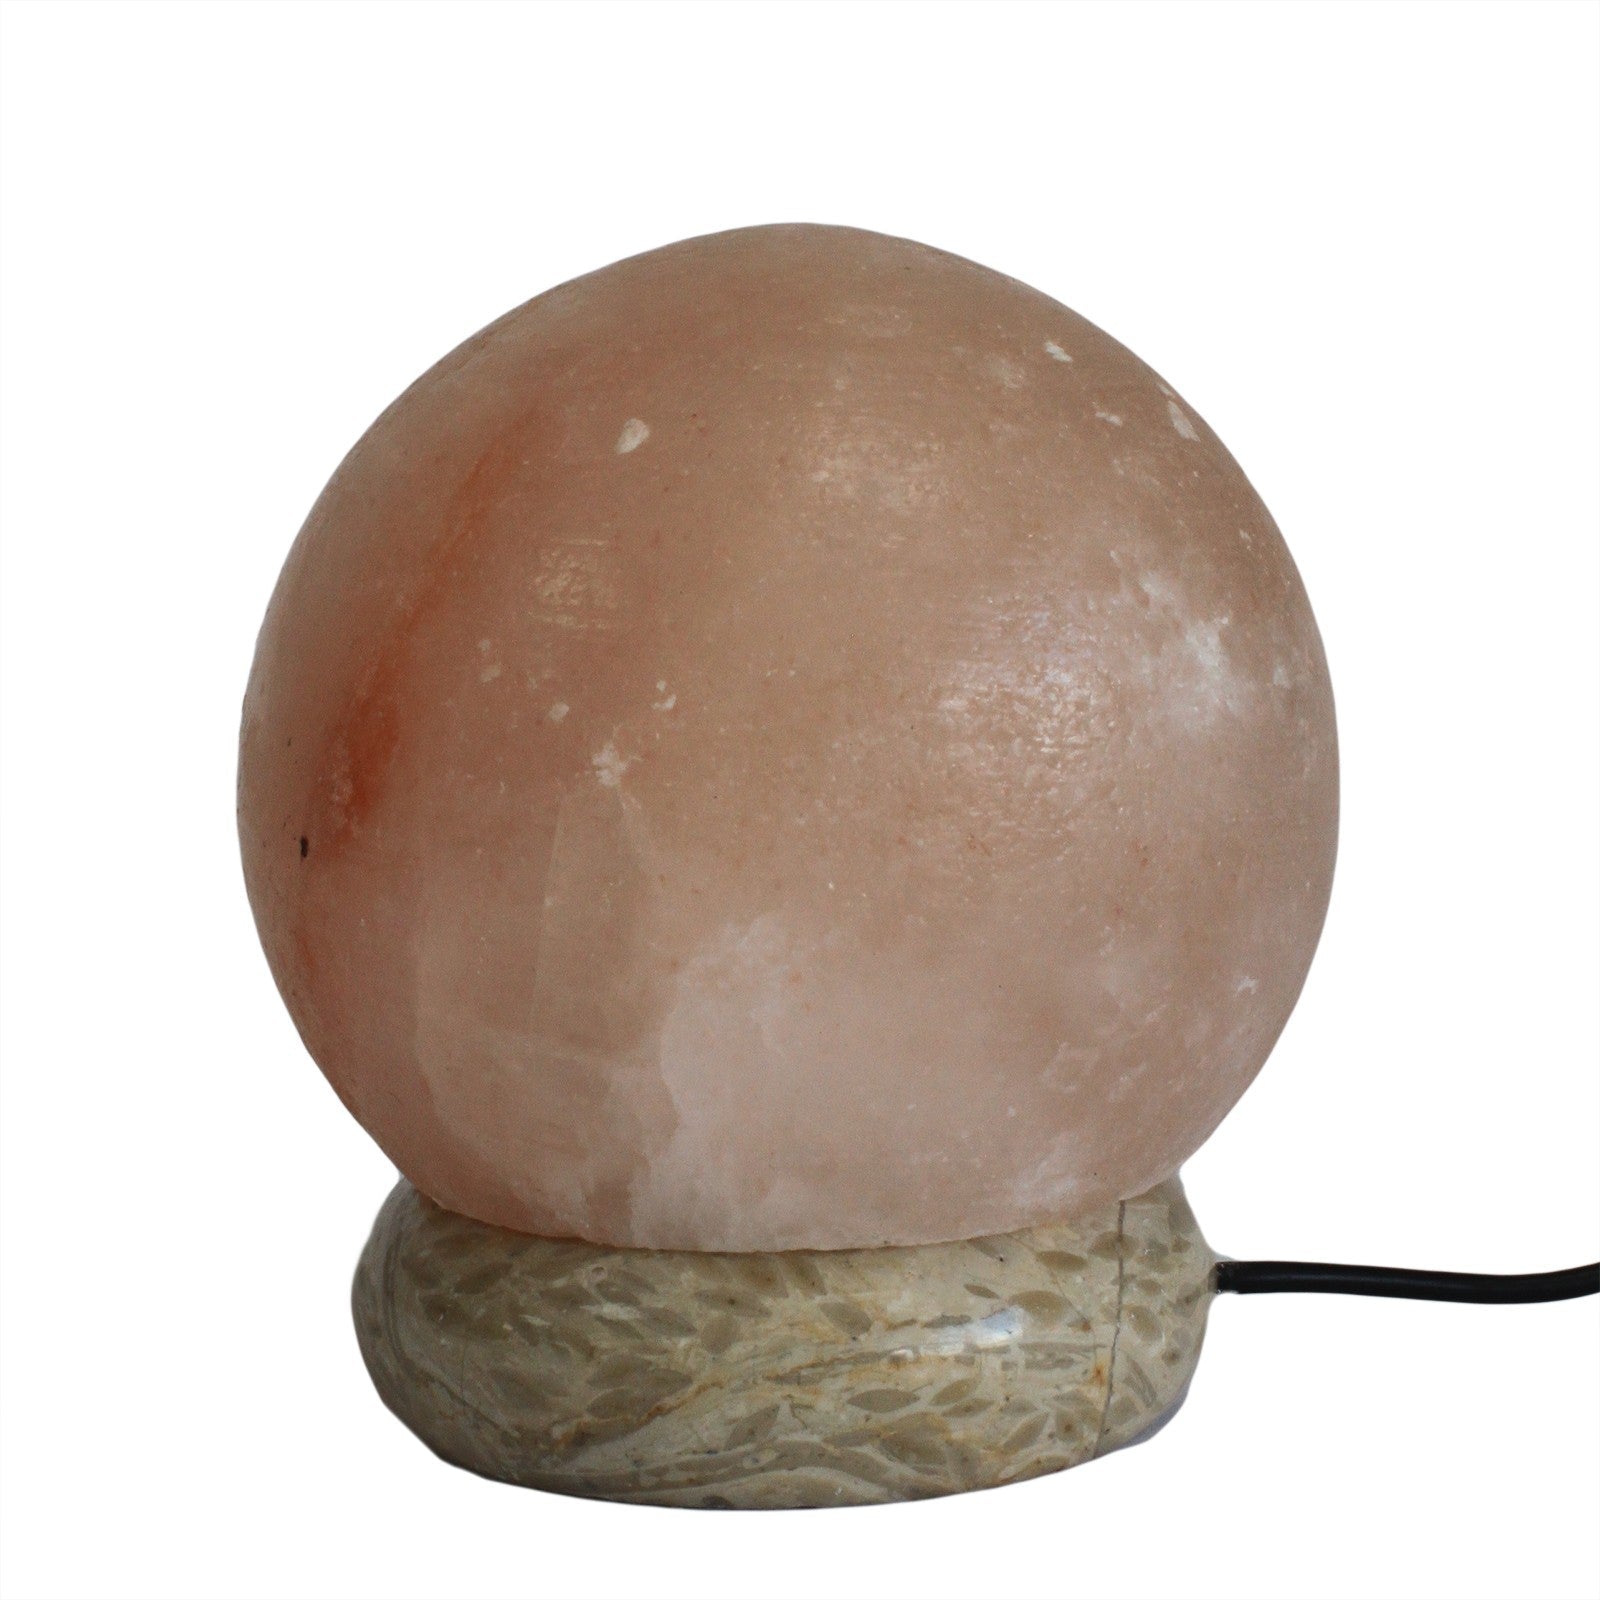 View Quality USB Ball Salt Lamp 8 cm multi information